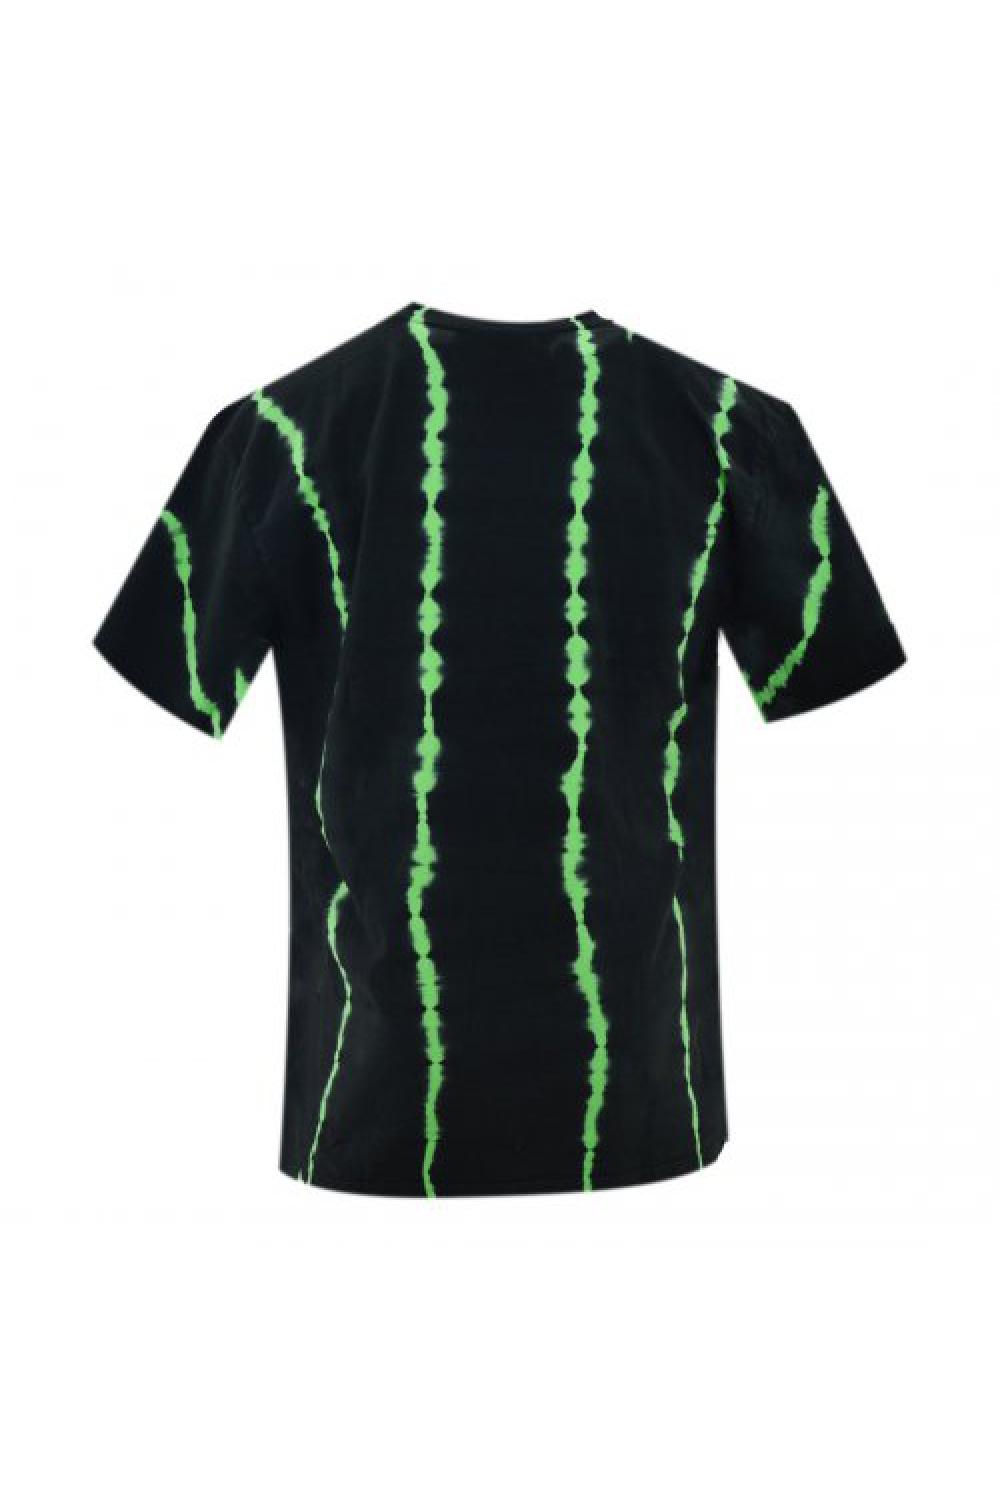 KARL KANI T-shirt Small Signature Tie Dye Unisex - Black - Green (KM221-060-1)